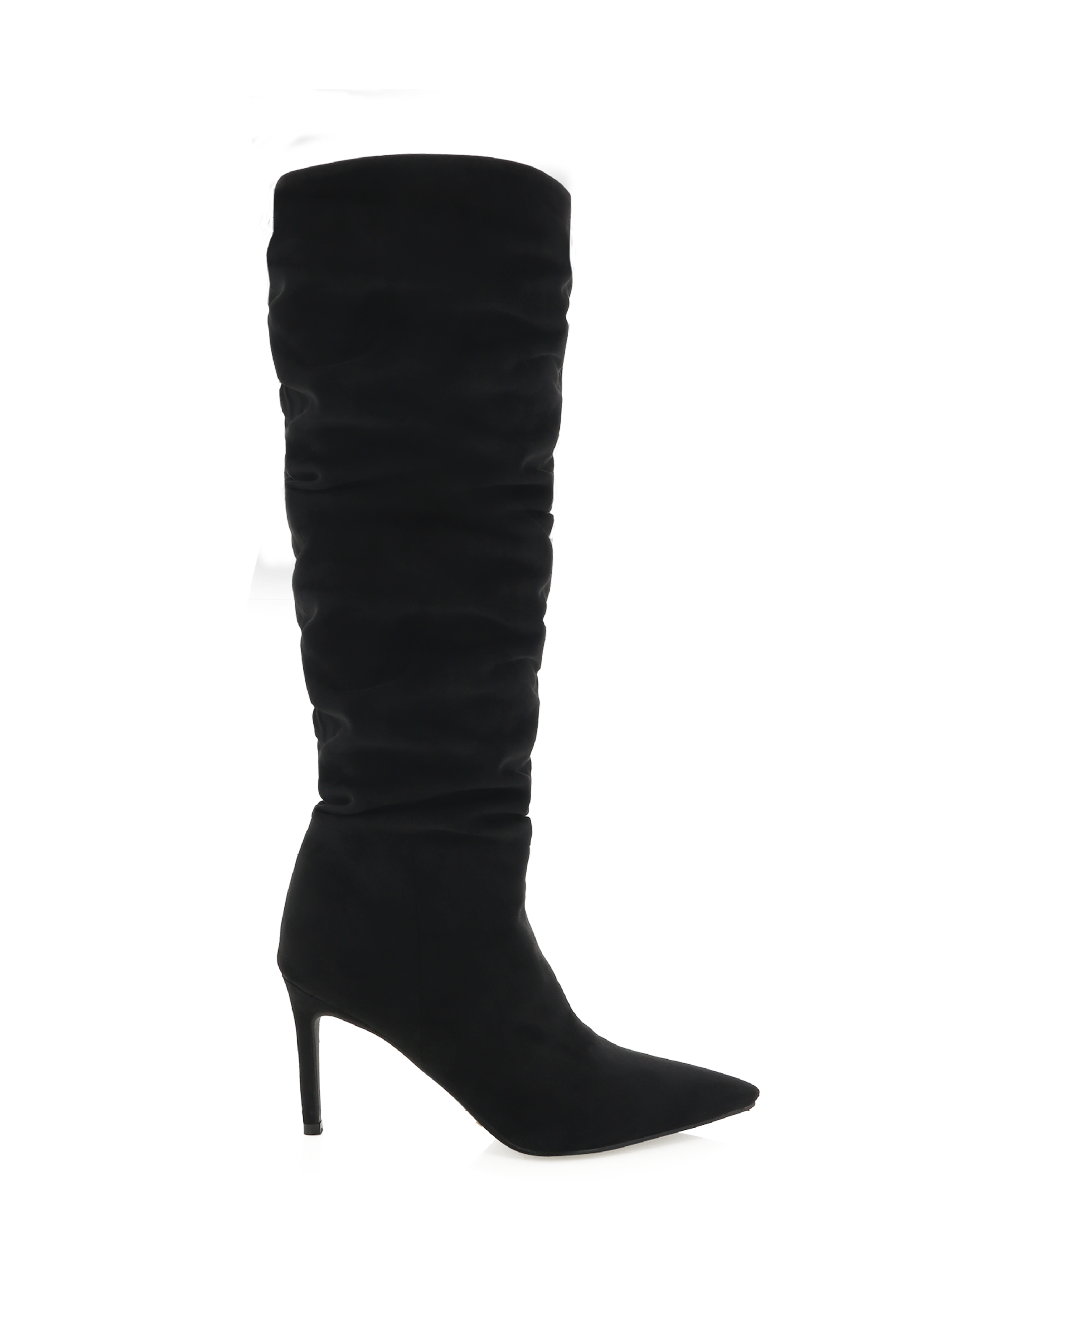 RAISA - BLACK SUEDE-Boots-Billini-Billini